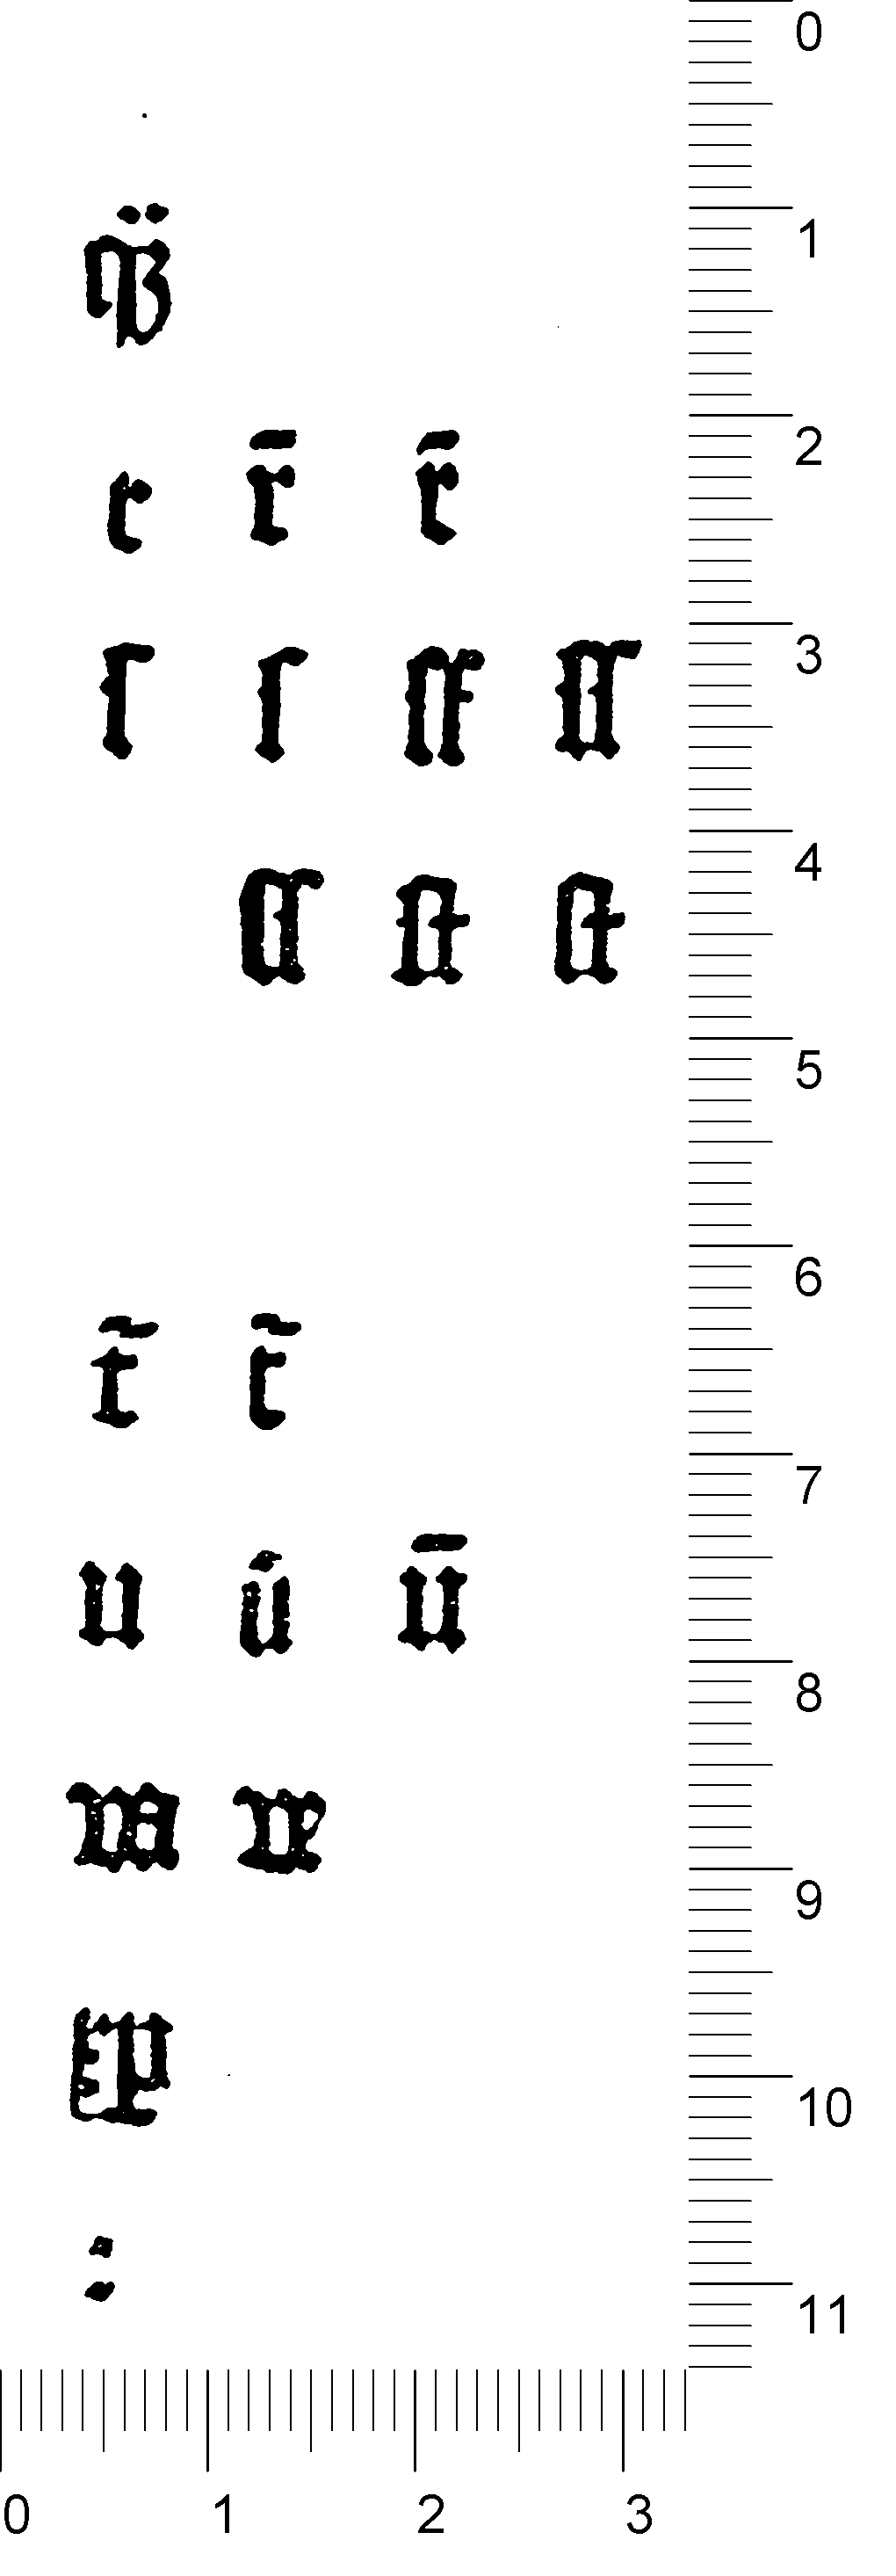 Abbildung der GfT-Tafeln vonGfT1529.2